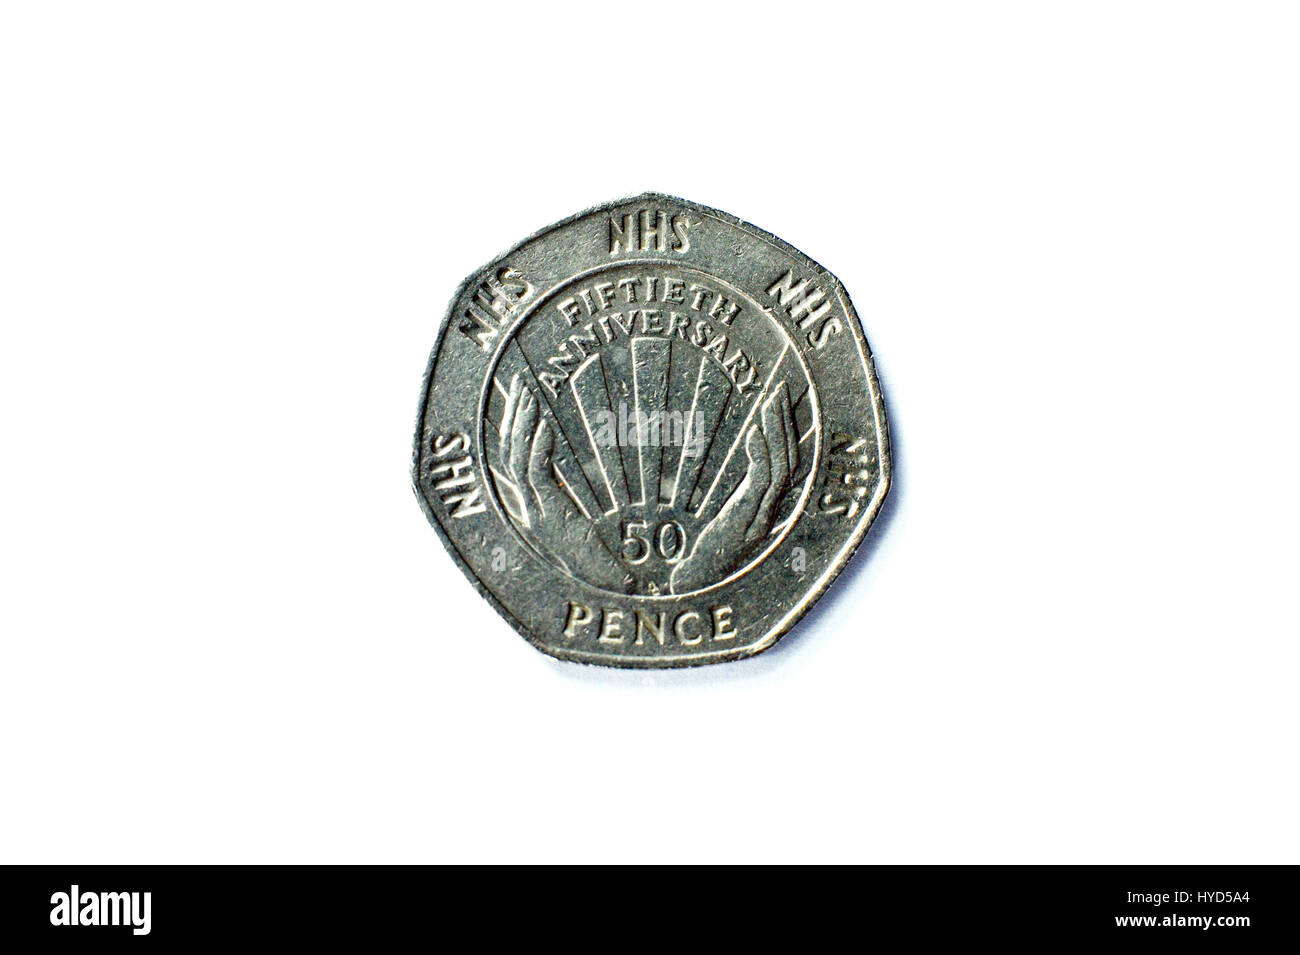 NHS celebration 50 pence UK coin Stock Photo